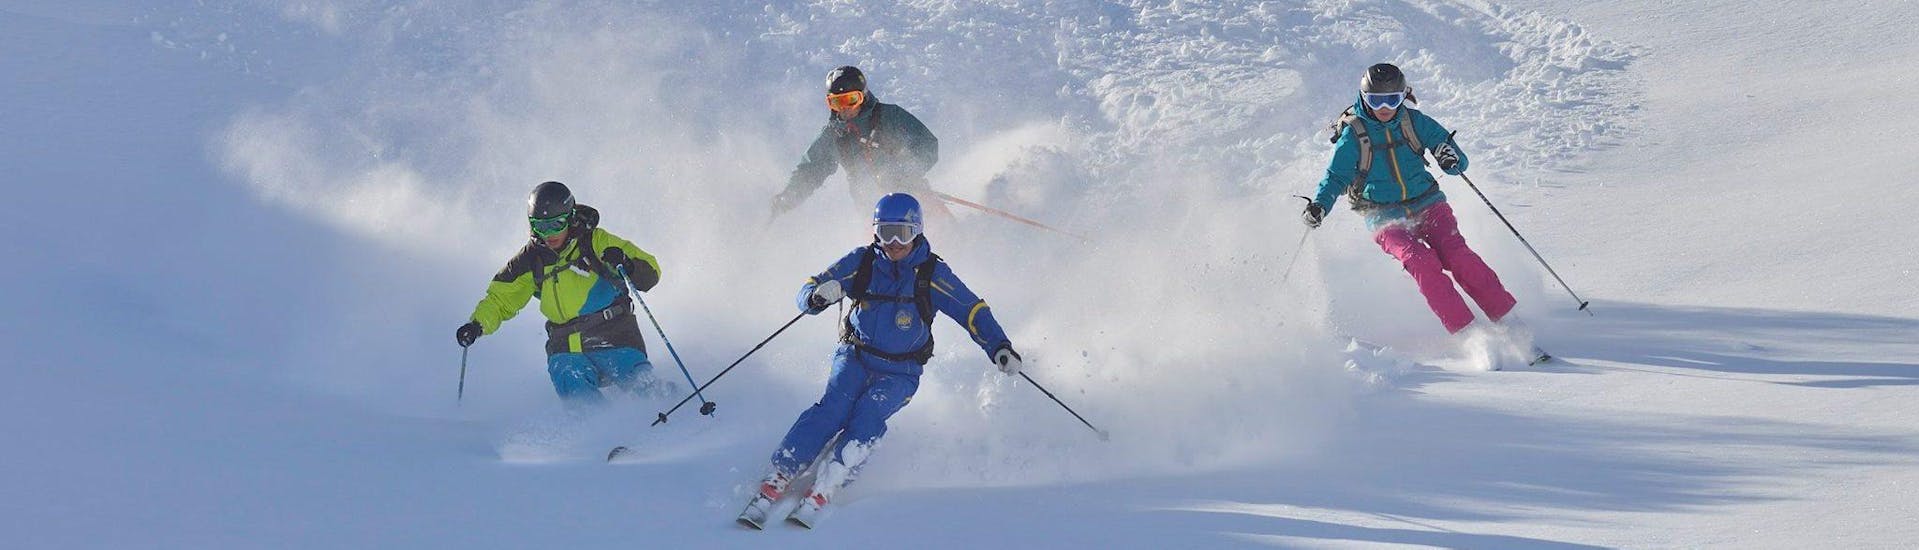 Lezioni di sci per adulti di tutti i livelli.